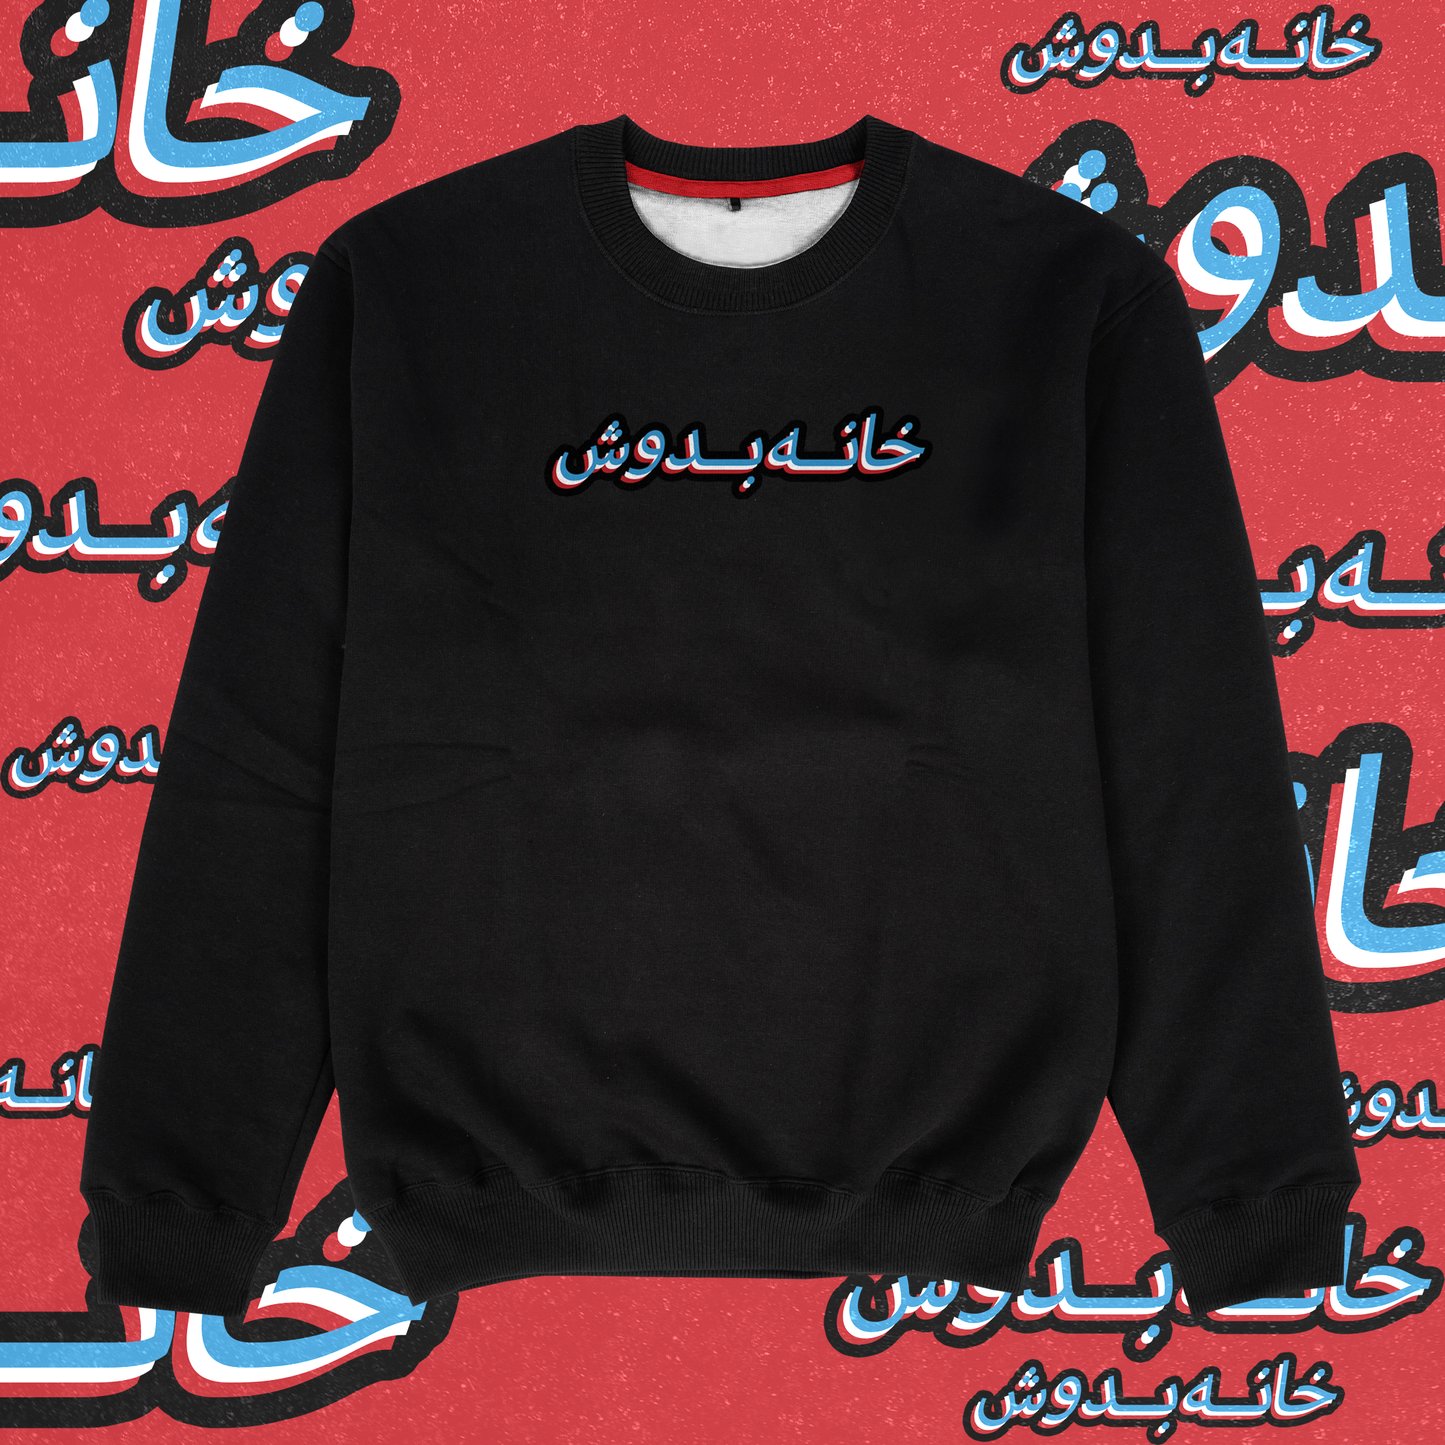 Khana Badosh Sweatshirt